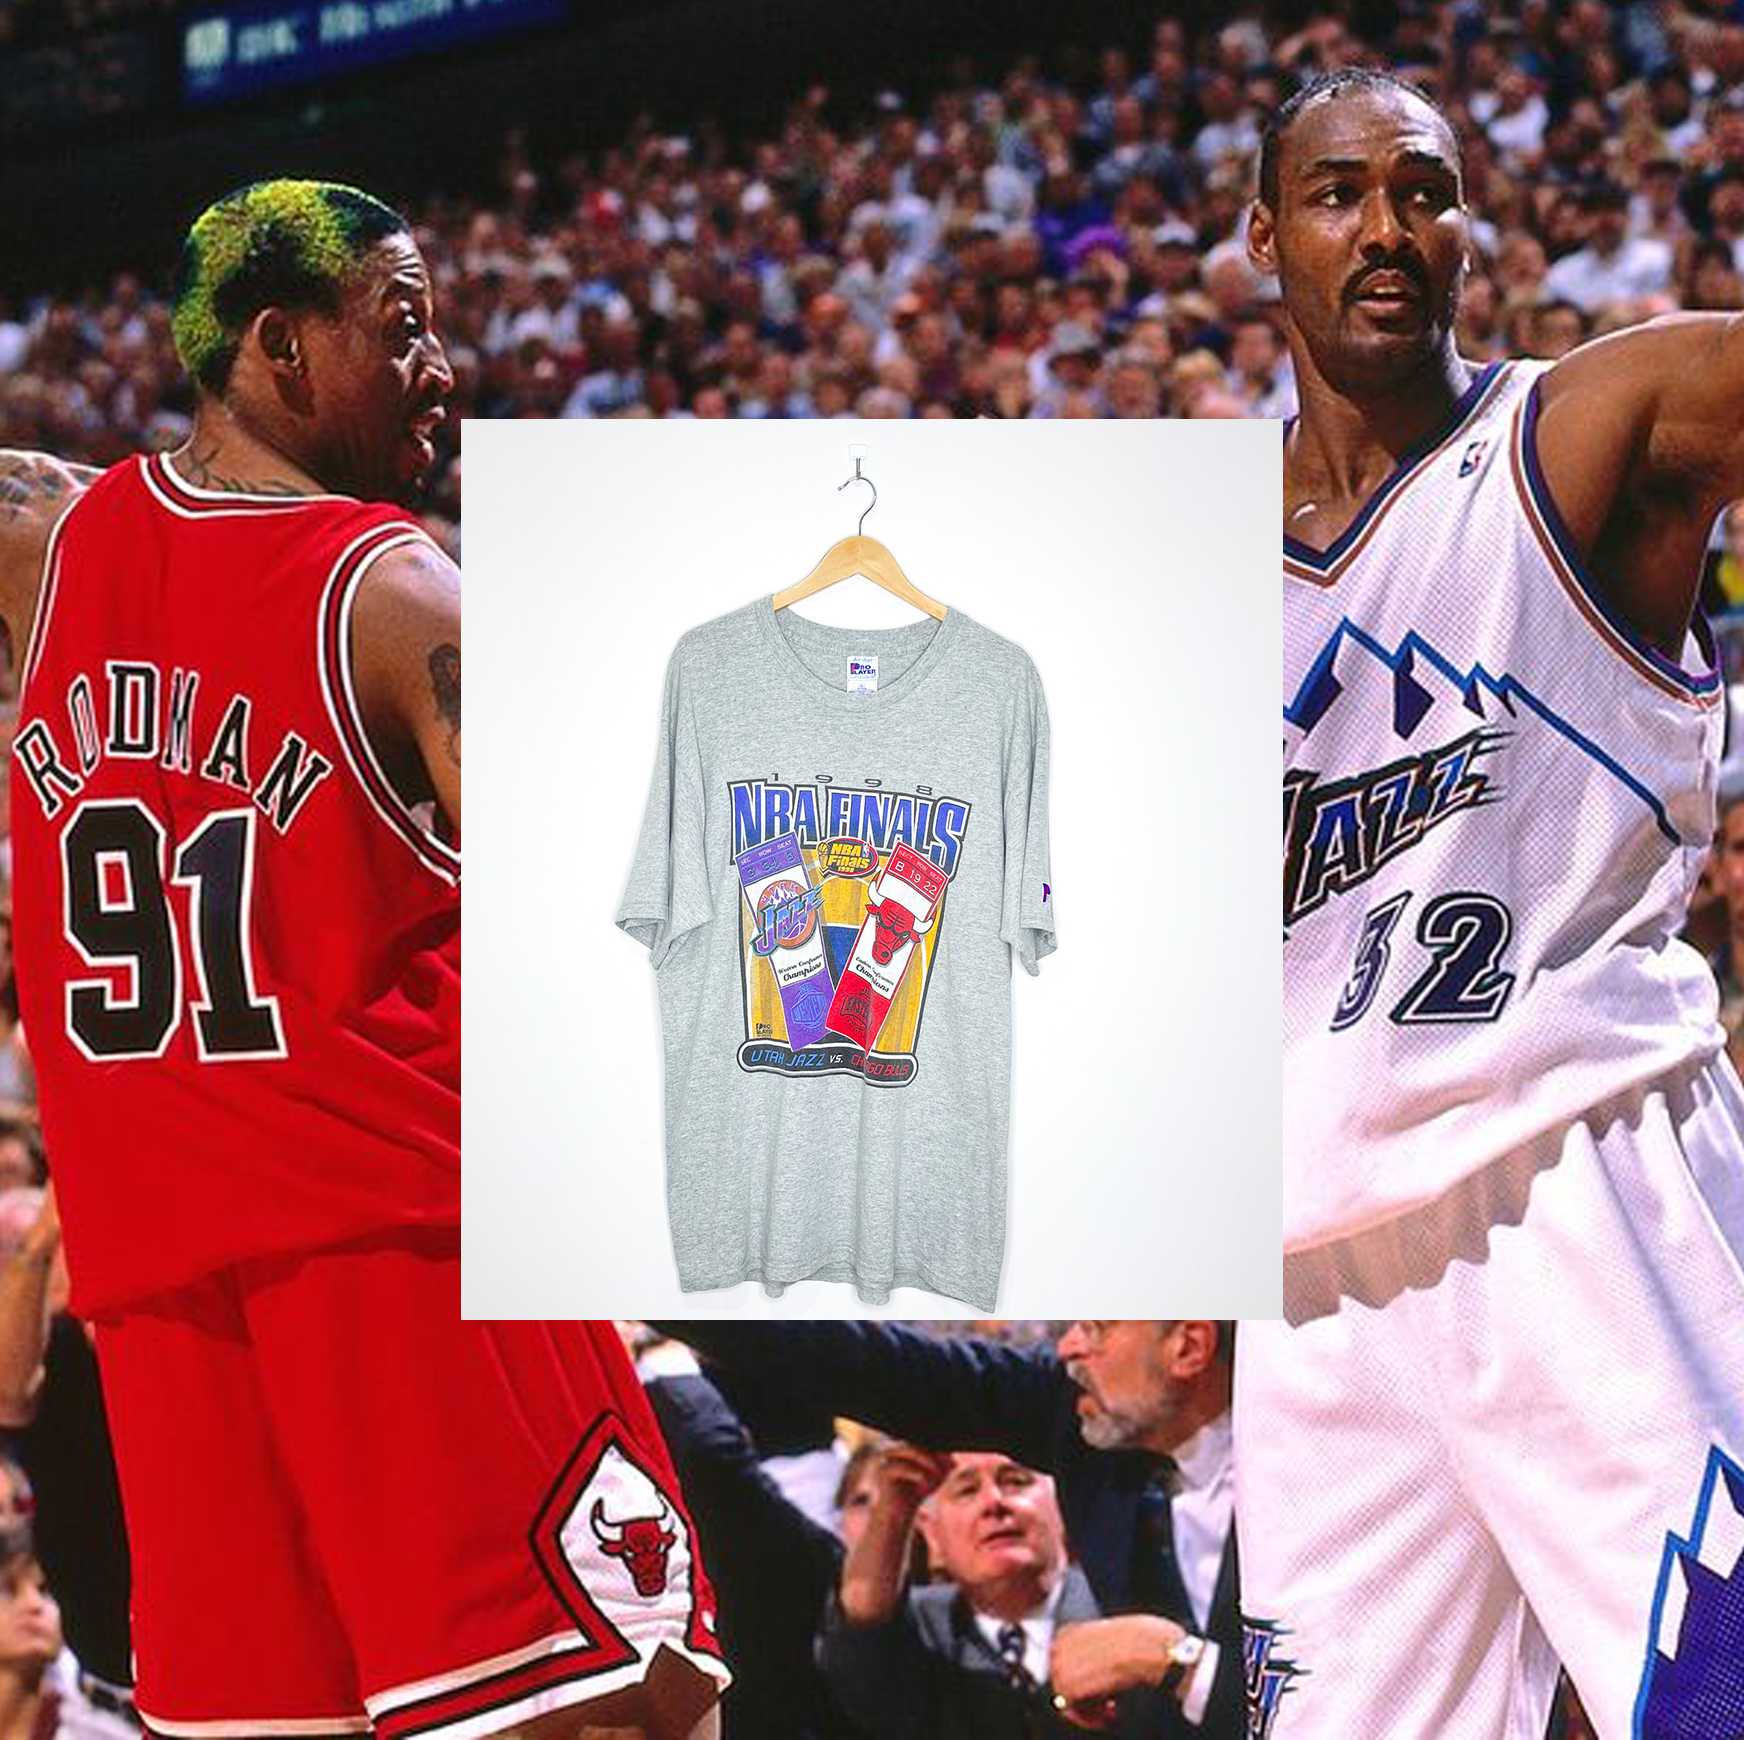 1998 NBA FINALS "Utah Jazz vs Chicago Bulls" VINTAGE TEE